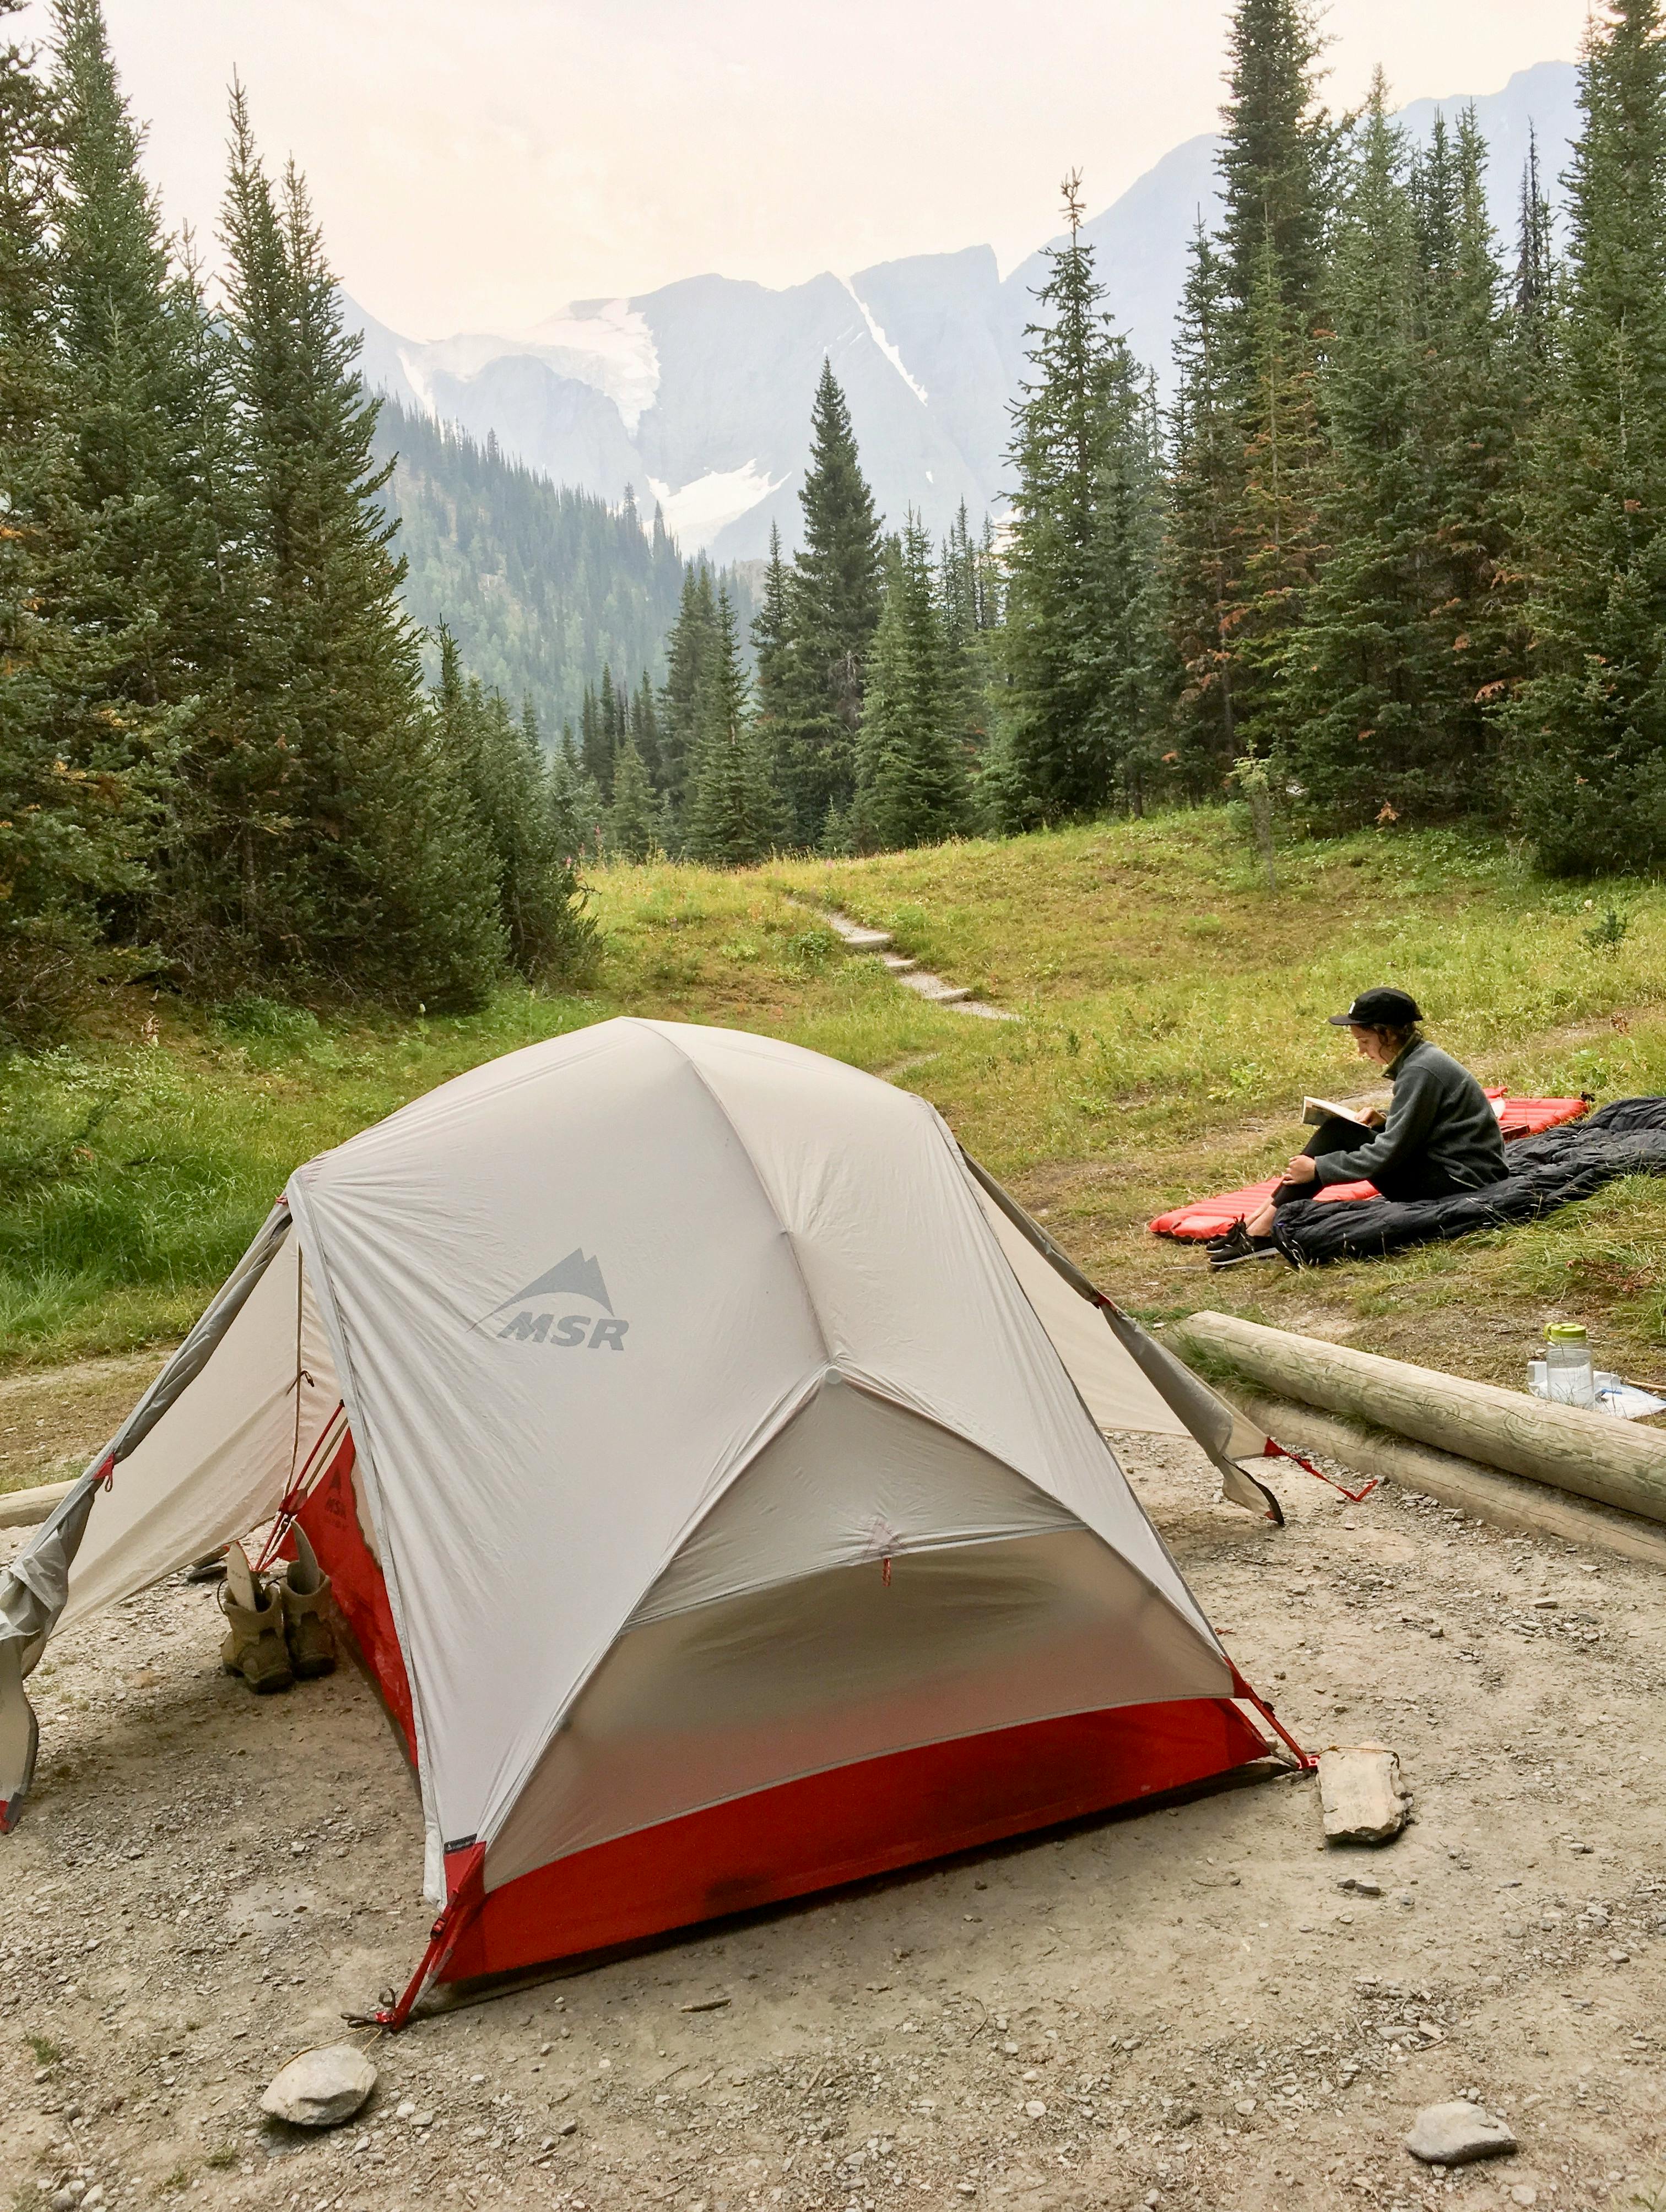 Camping & Hiking Expert Amy B